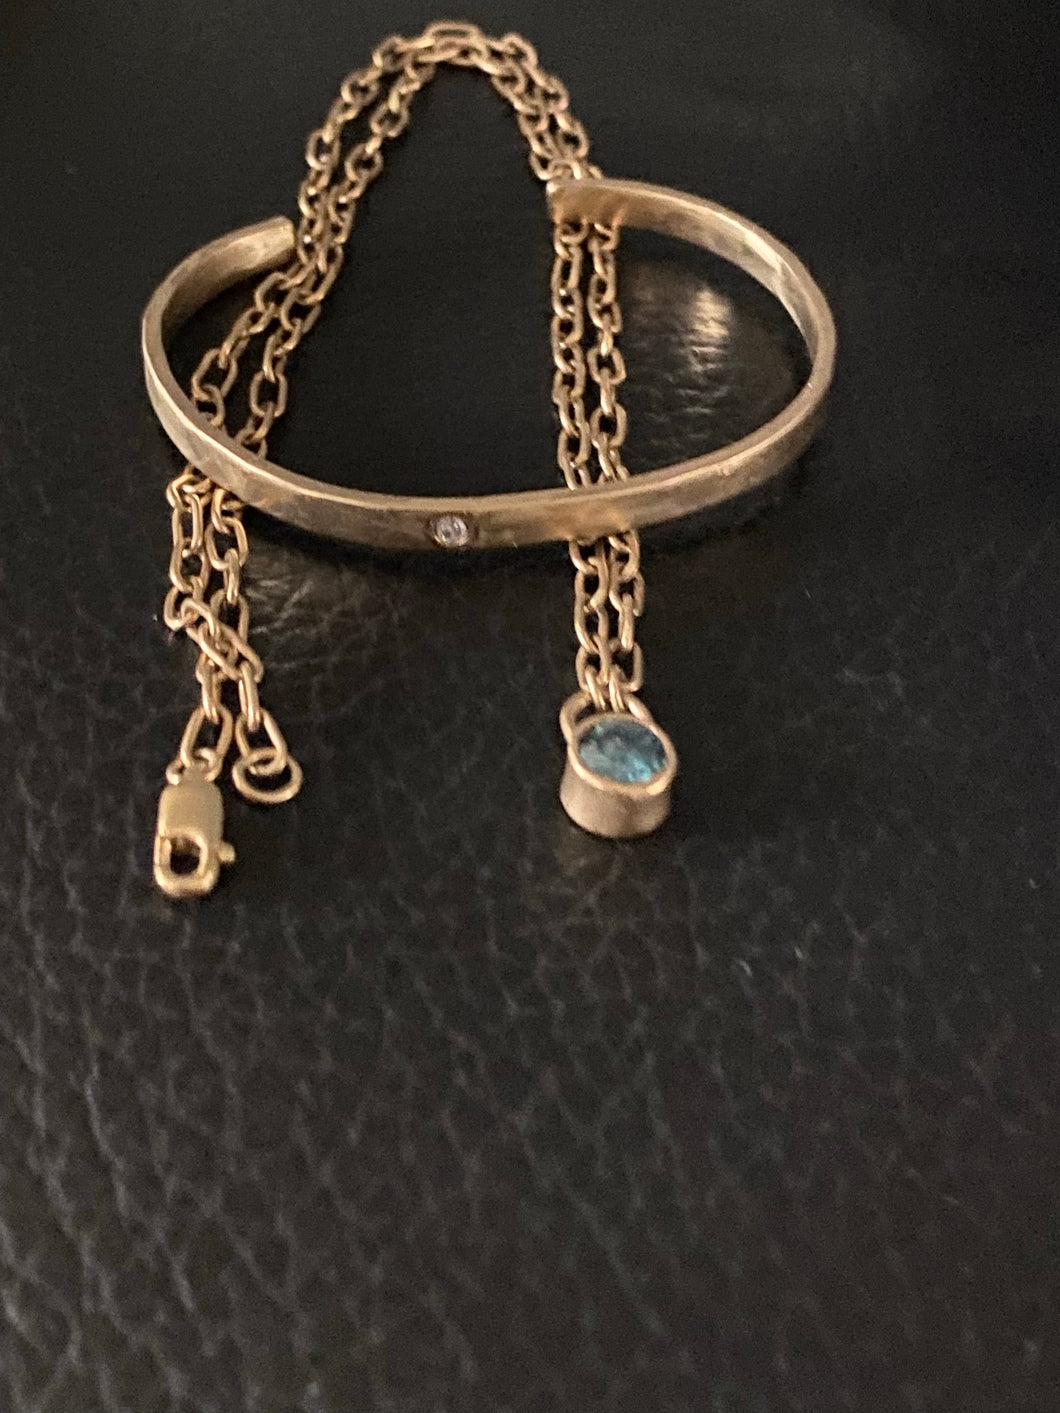 Blue diamond Roma Necklace